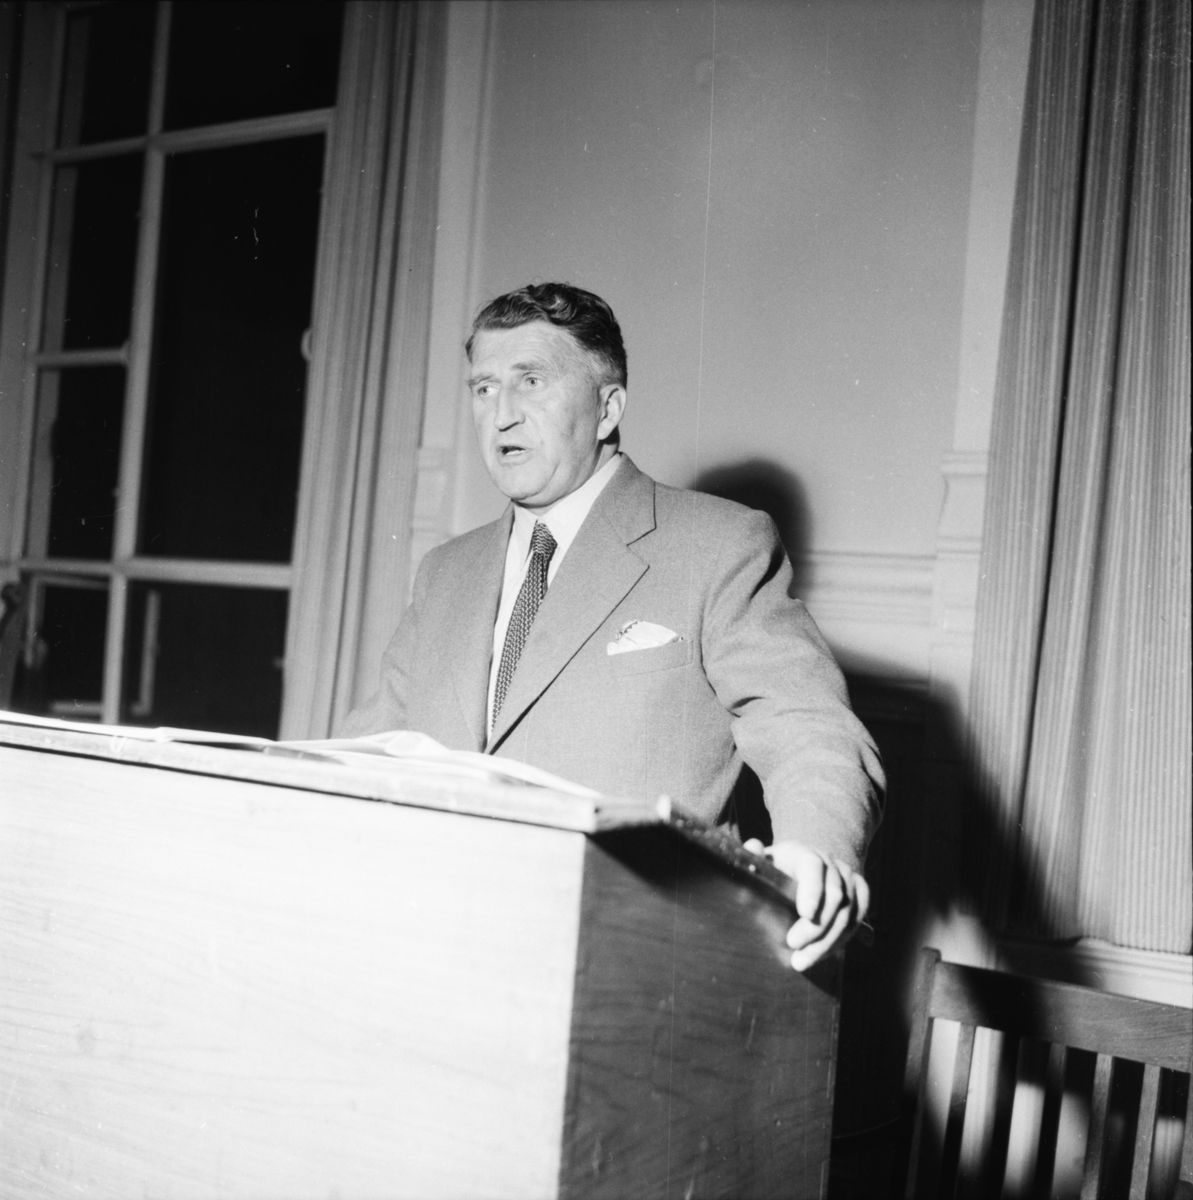 Vardens arkiv. "Byjubilekomiteen i Skien (1951)
Jurysalen i Rådhuset"  06.05.1954